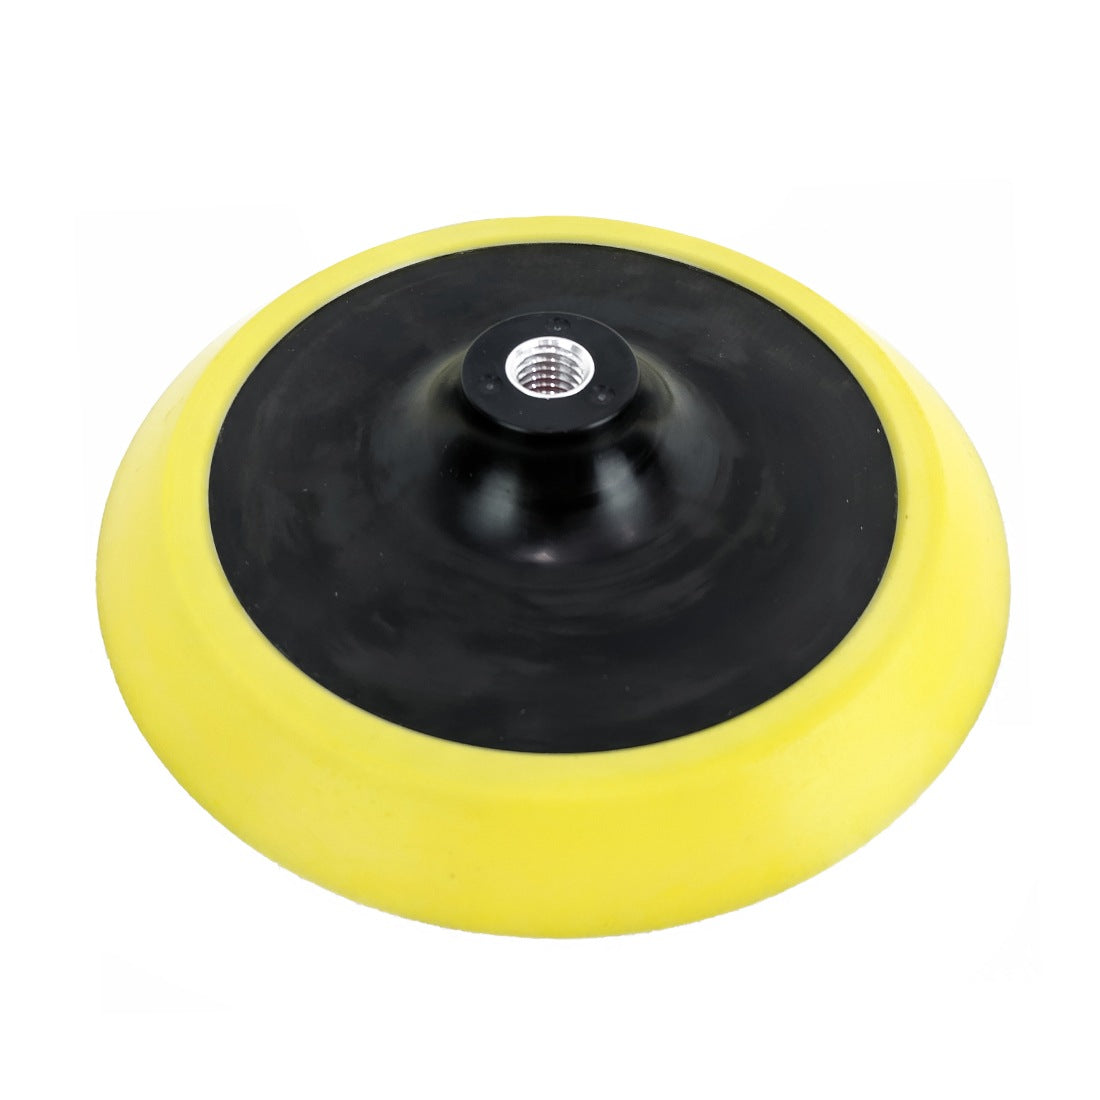 GlassRenu Yellow Backing Pad - 8 Inch - Main Product View